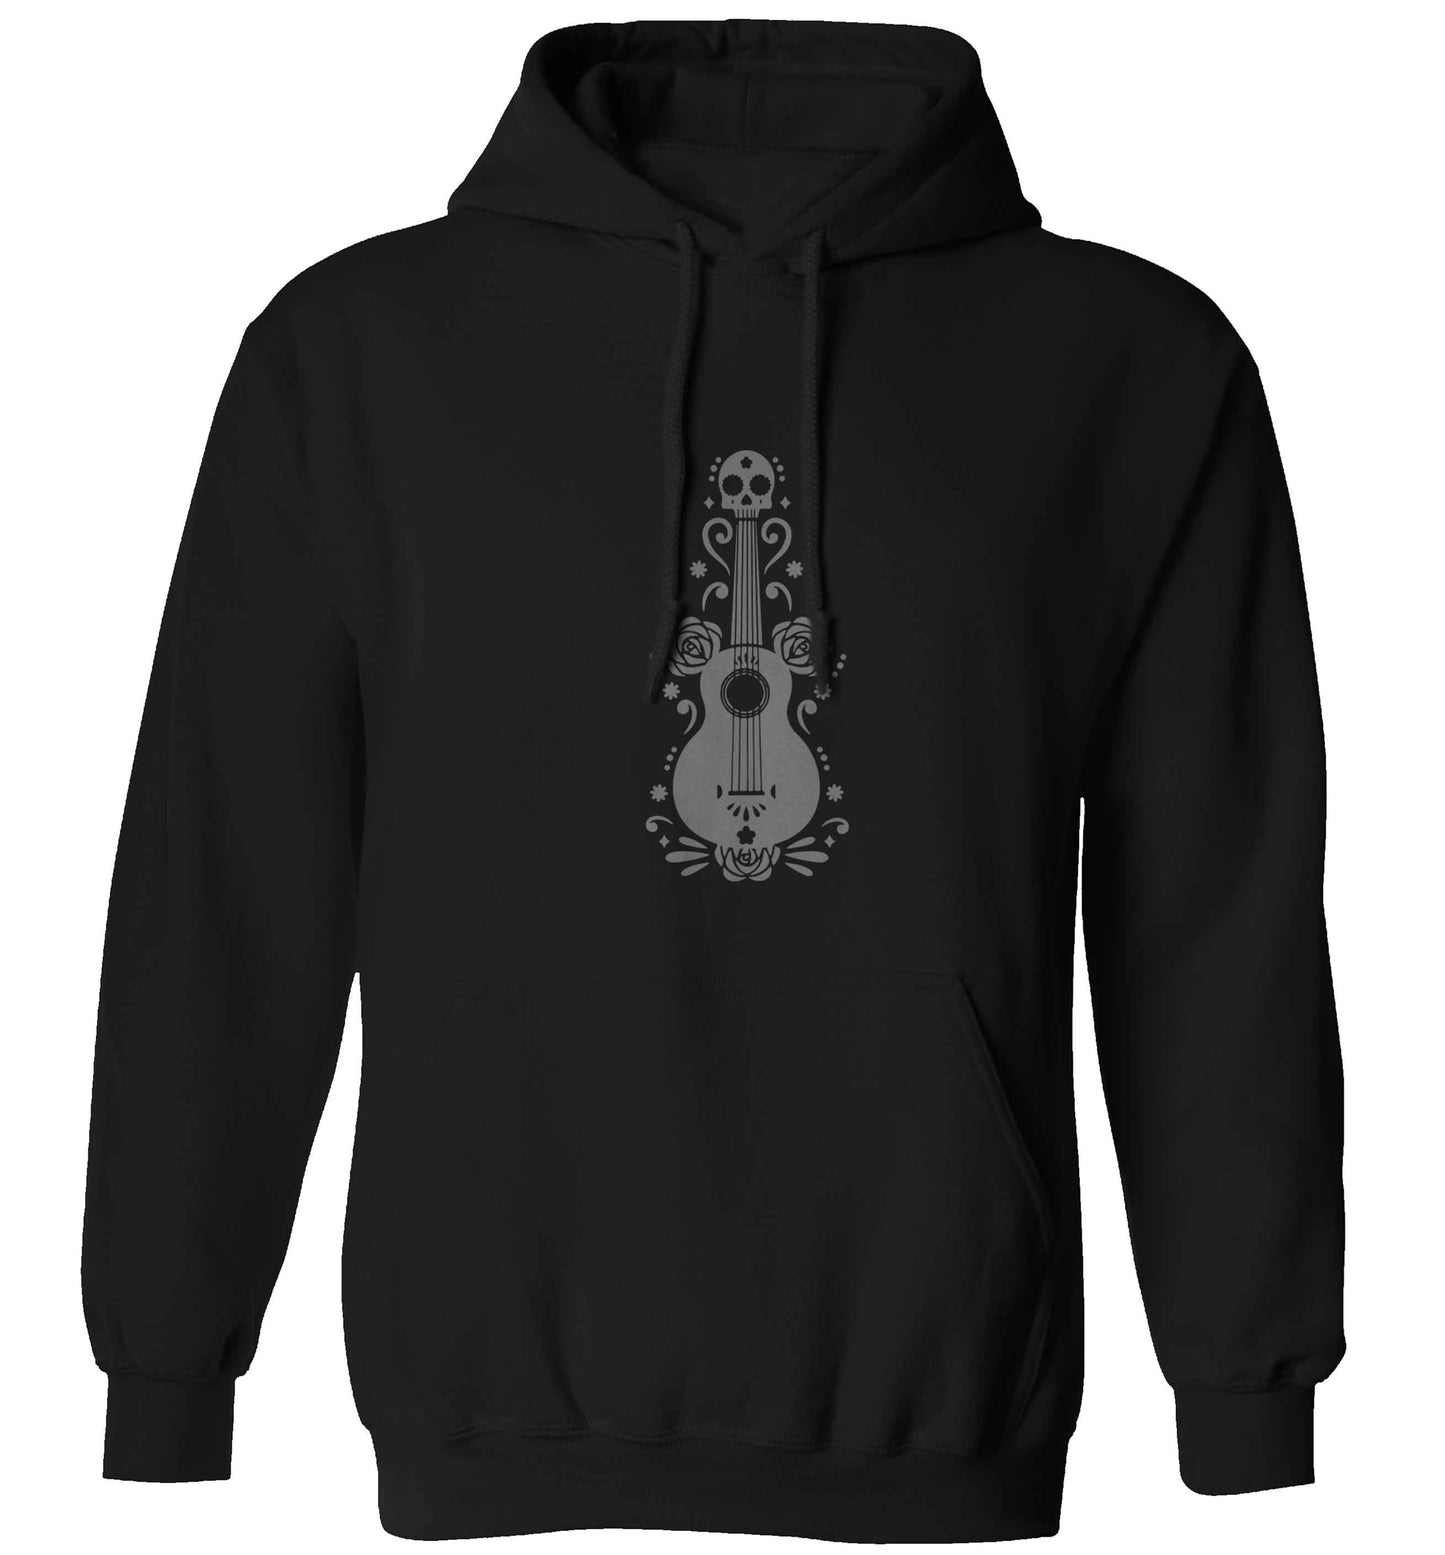 Guitar skull illustration adults unisex black hoodie 2XL